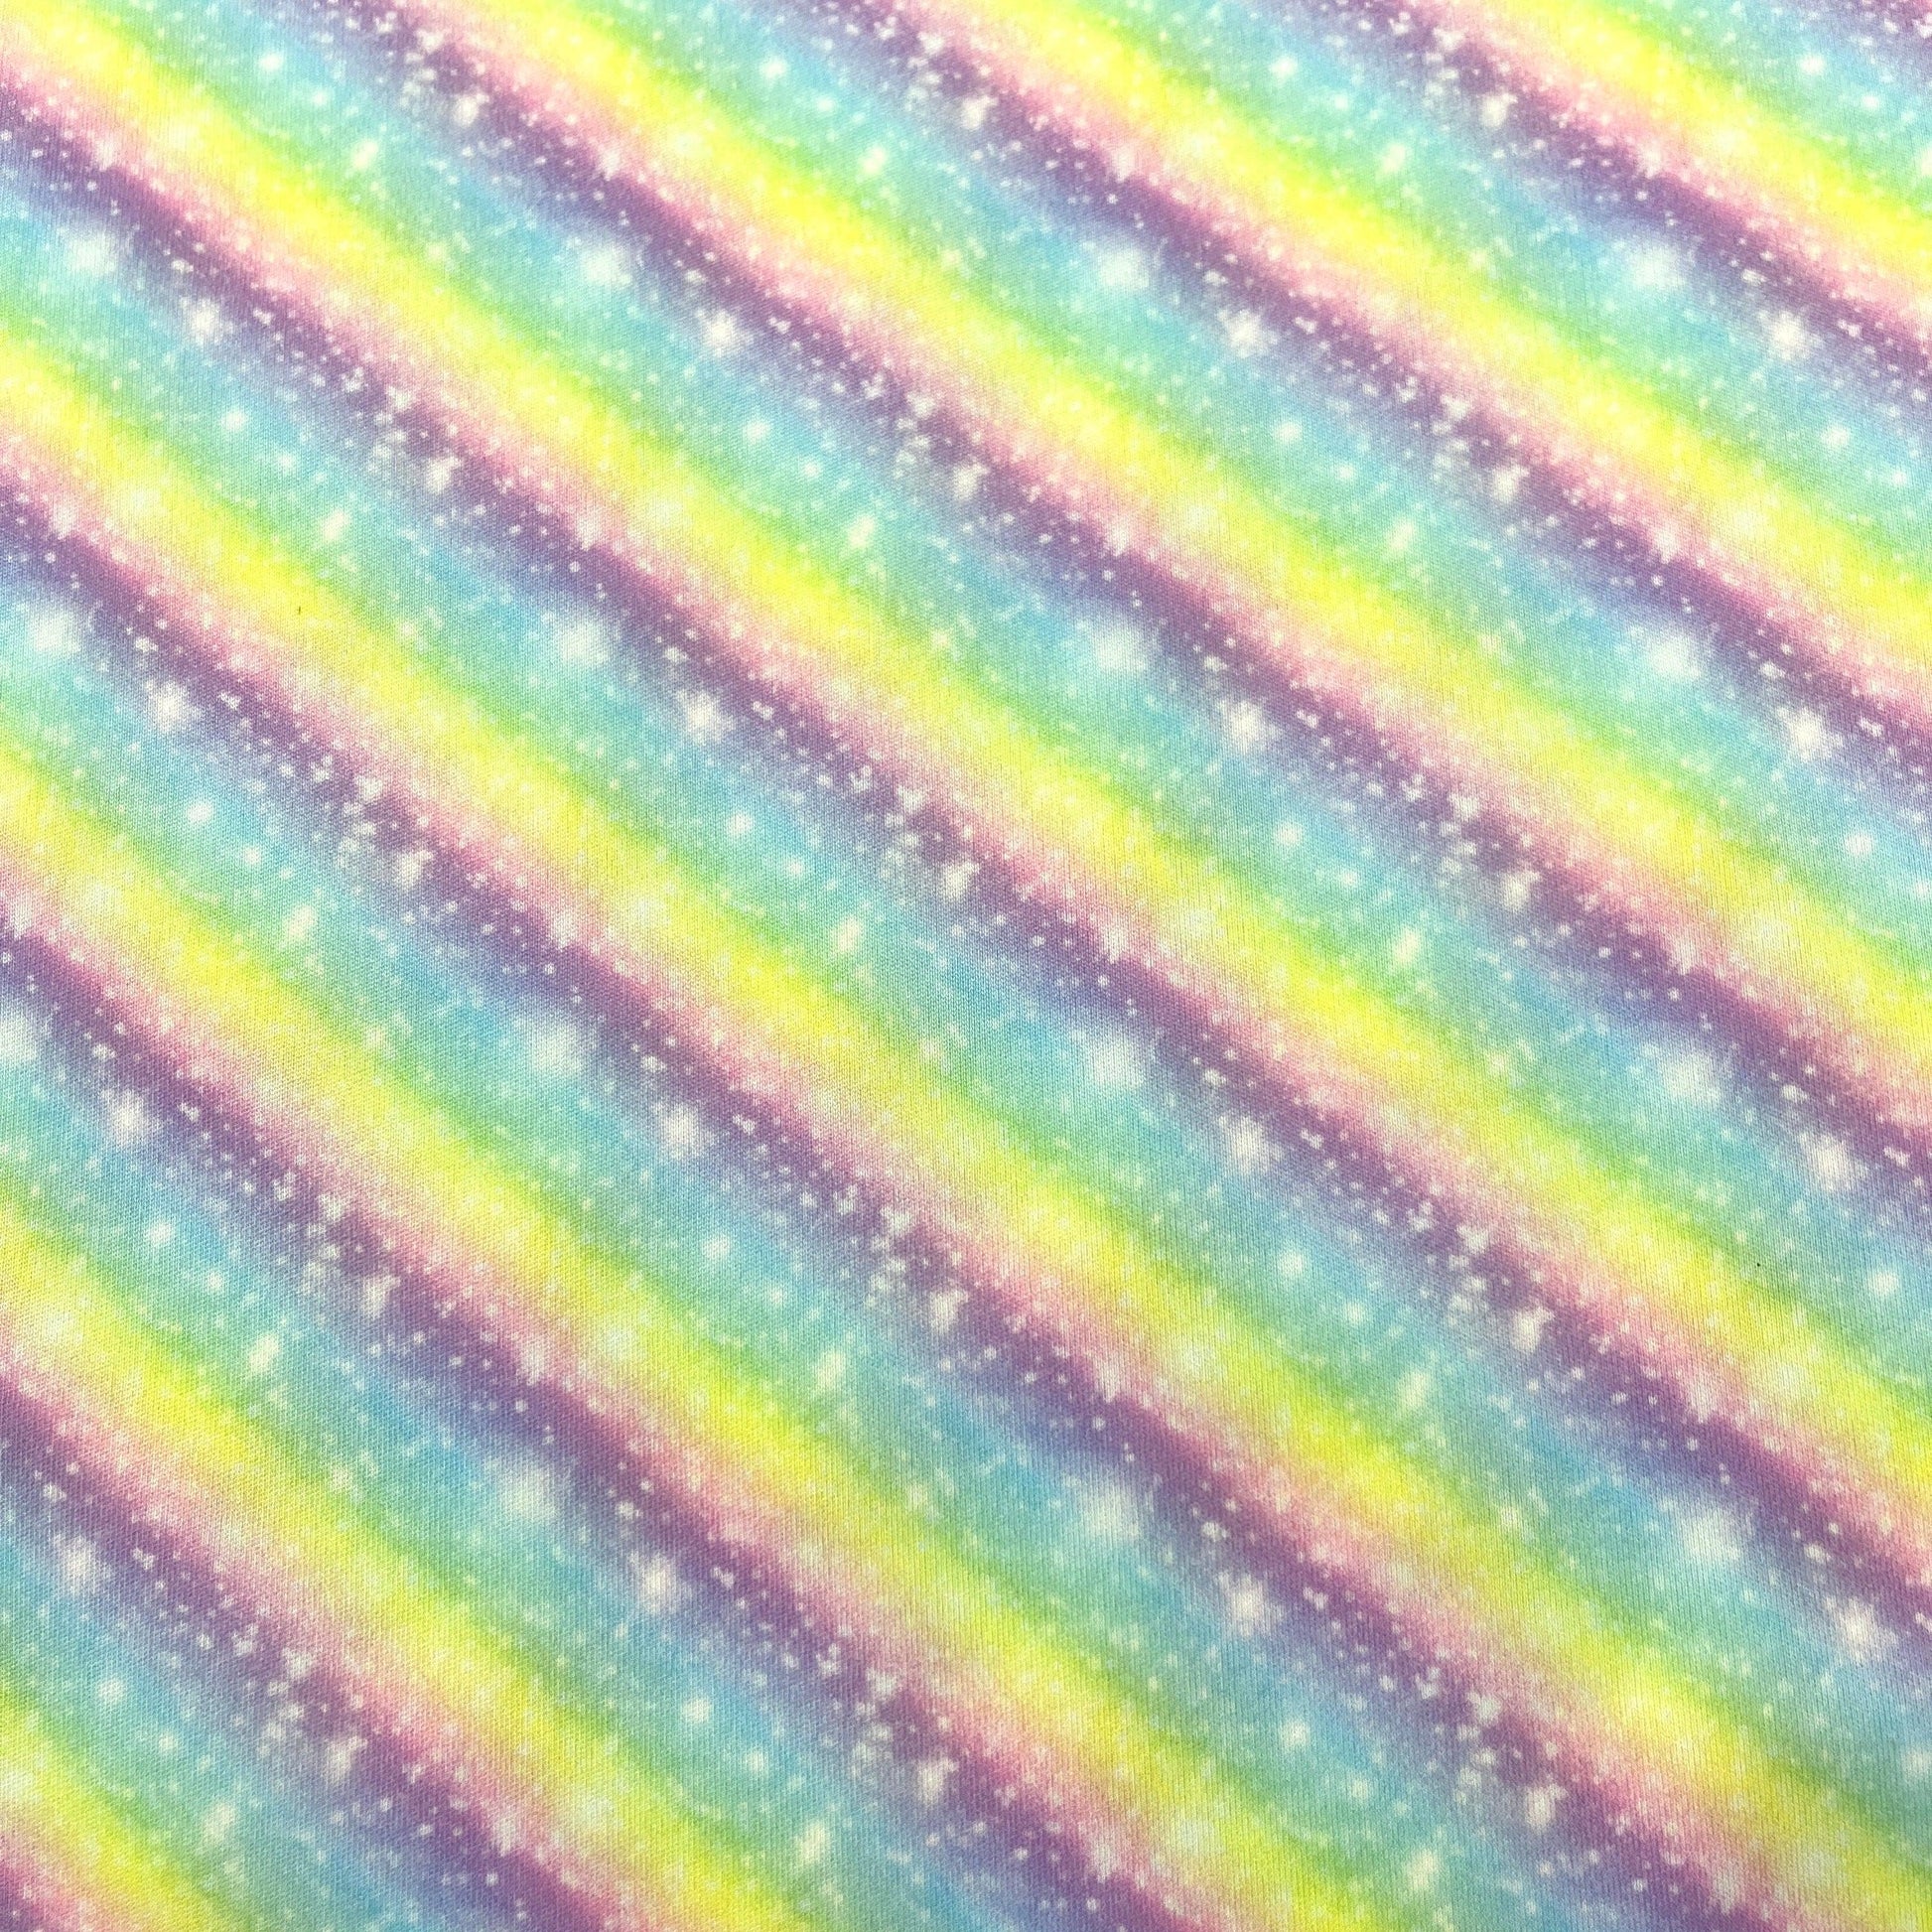 Diagonal Rainbow 1 mil PUL Fabric - Made in the USA - Nature's Fabrics